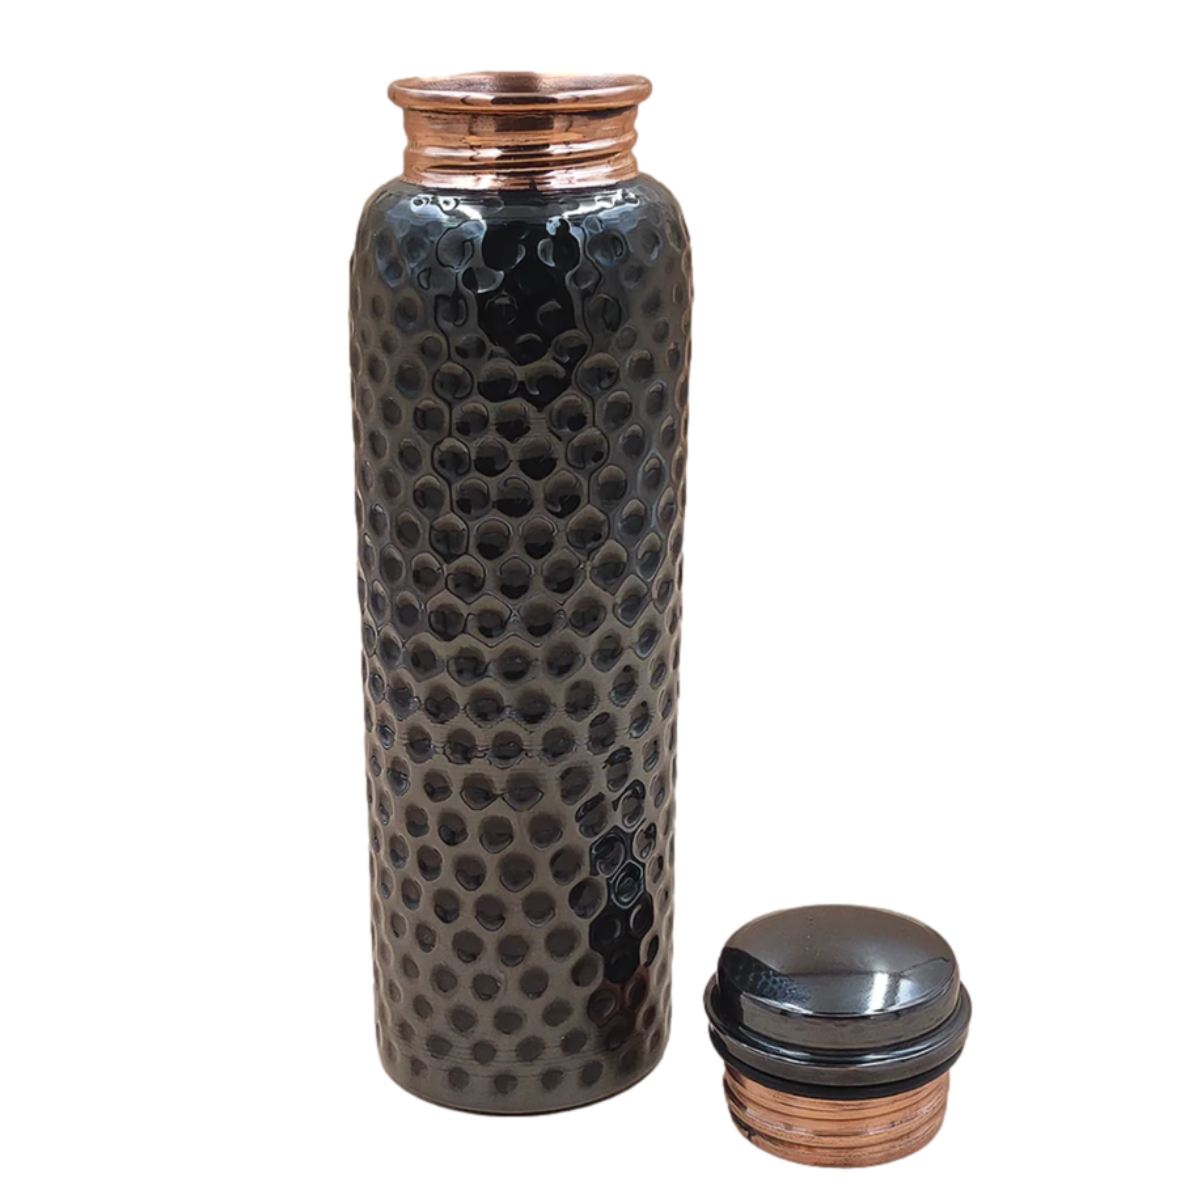 Copy of Mexican Copper 1 L / 33 oz. Water Bottle- Black Finish CoLores Decor